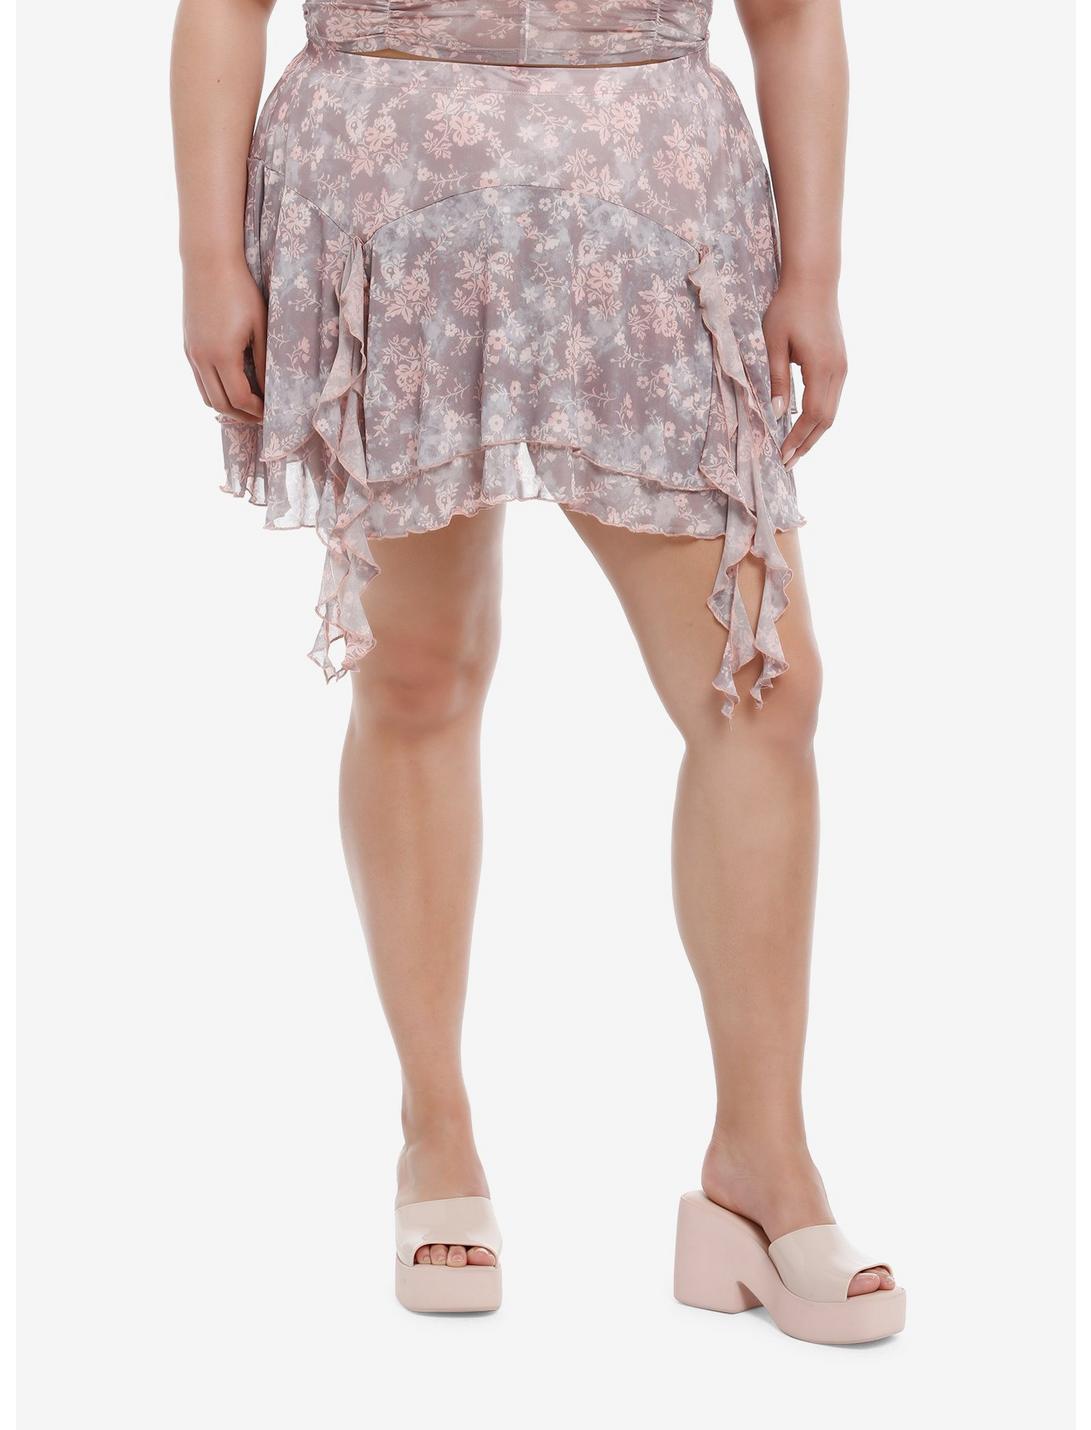 Thorn & Fable Pink & Brown Floral Hanky Hem Mesh Skirt Plus Size, PINK, hi-res